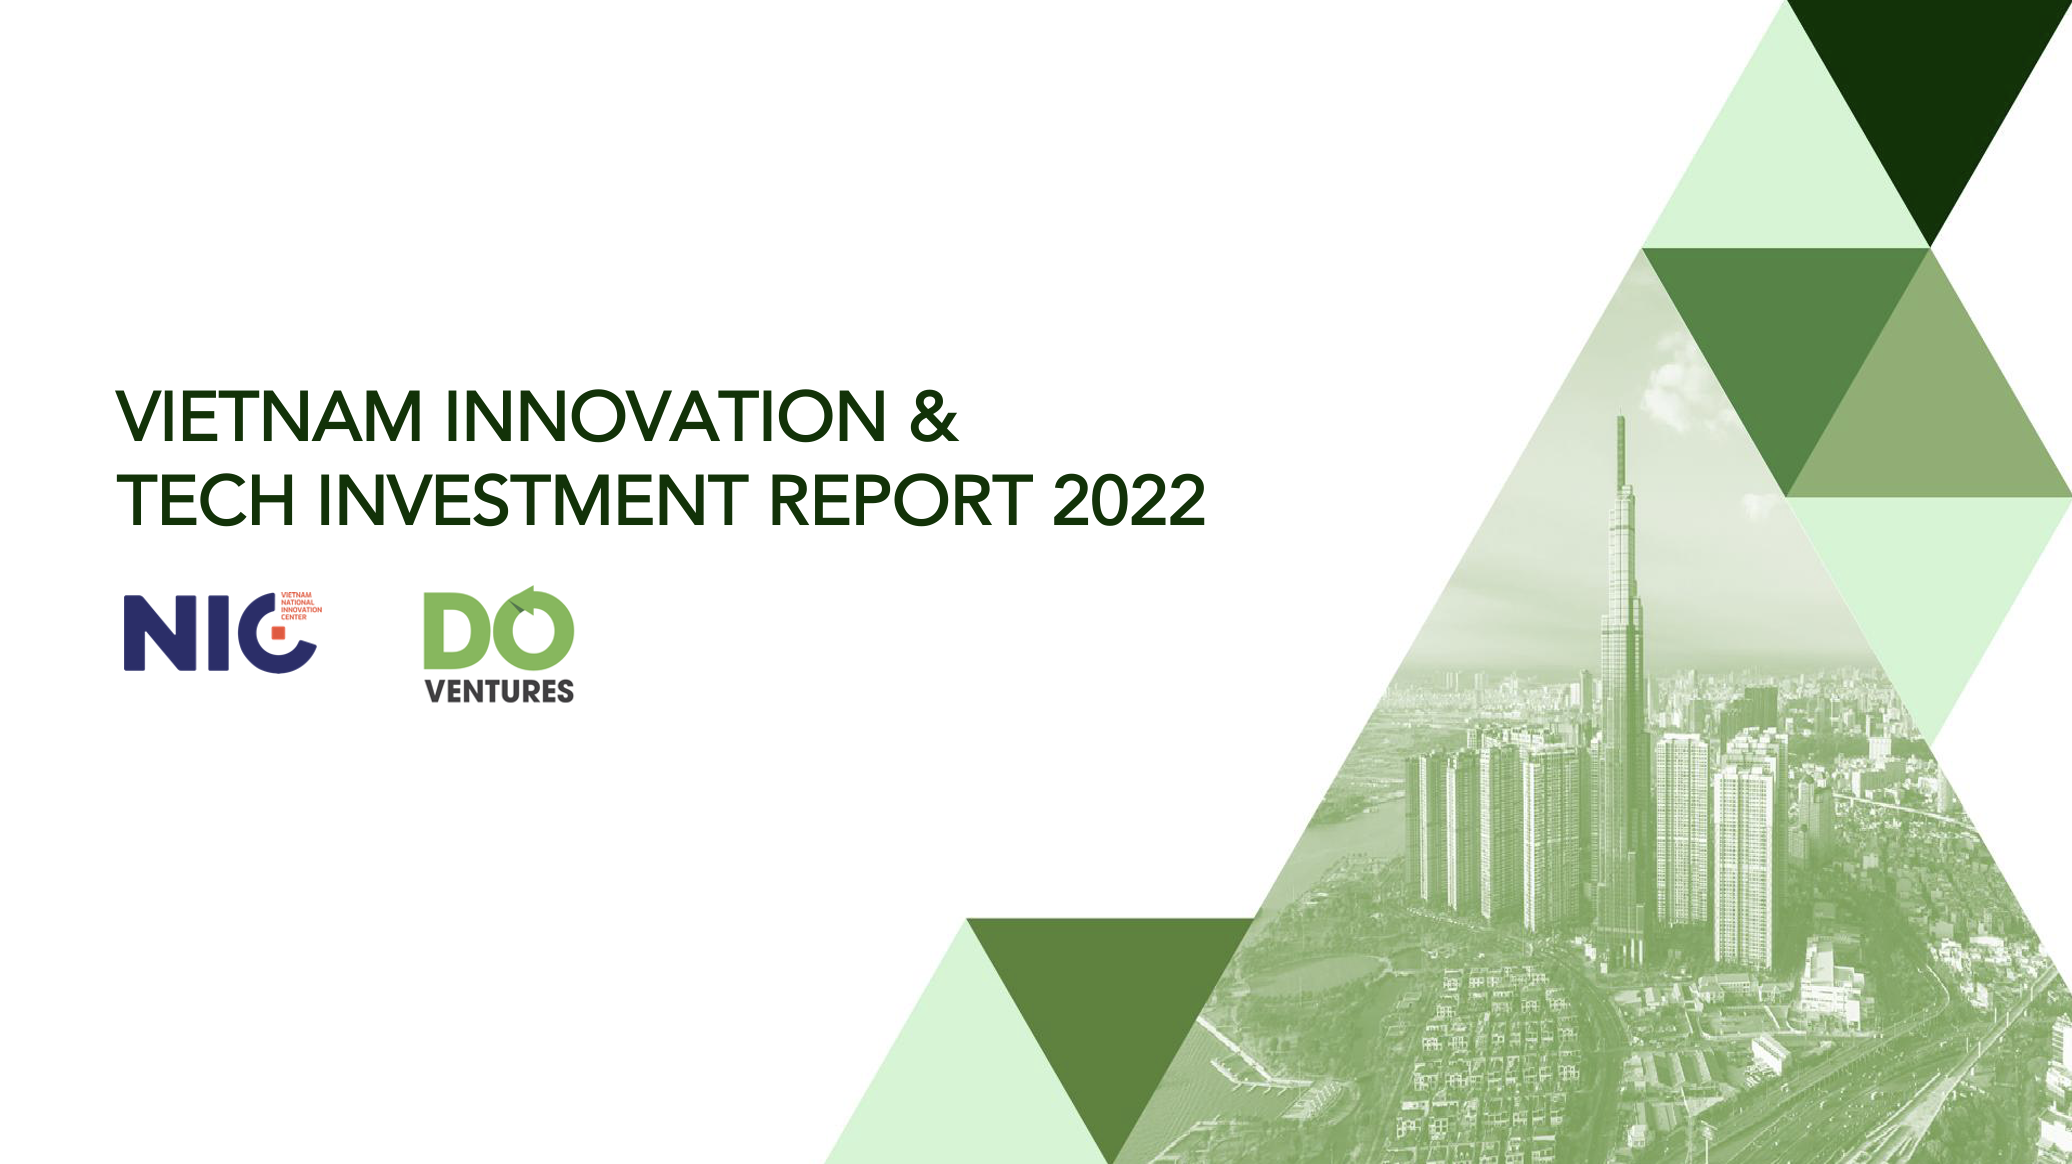 Vietnam Innovation & Tech Investment Report 2022